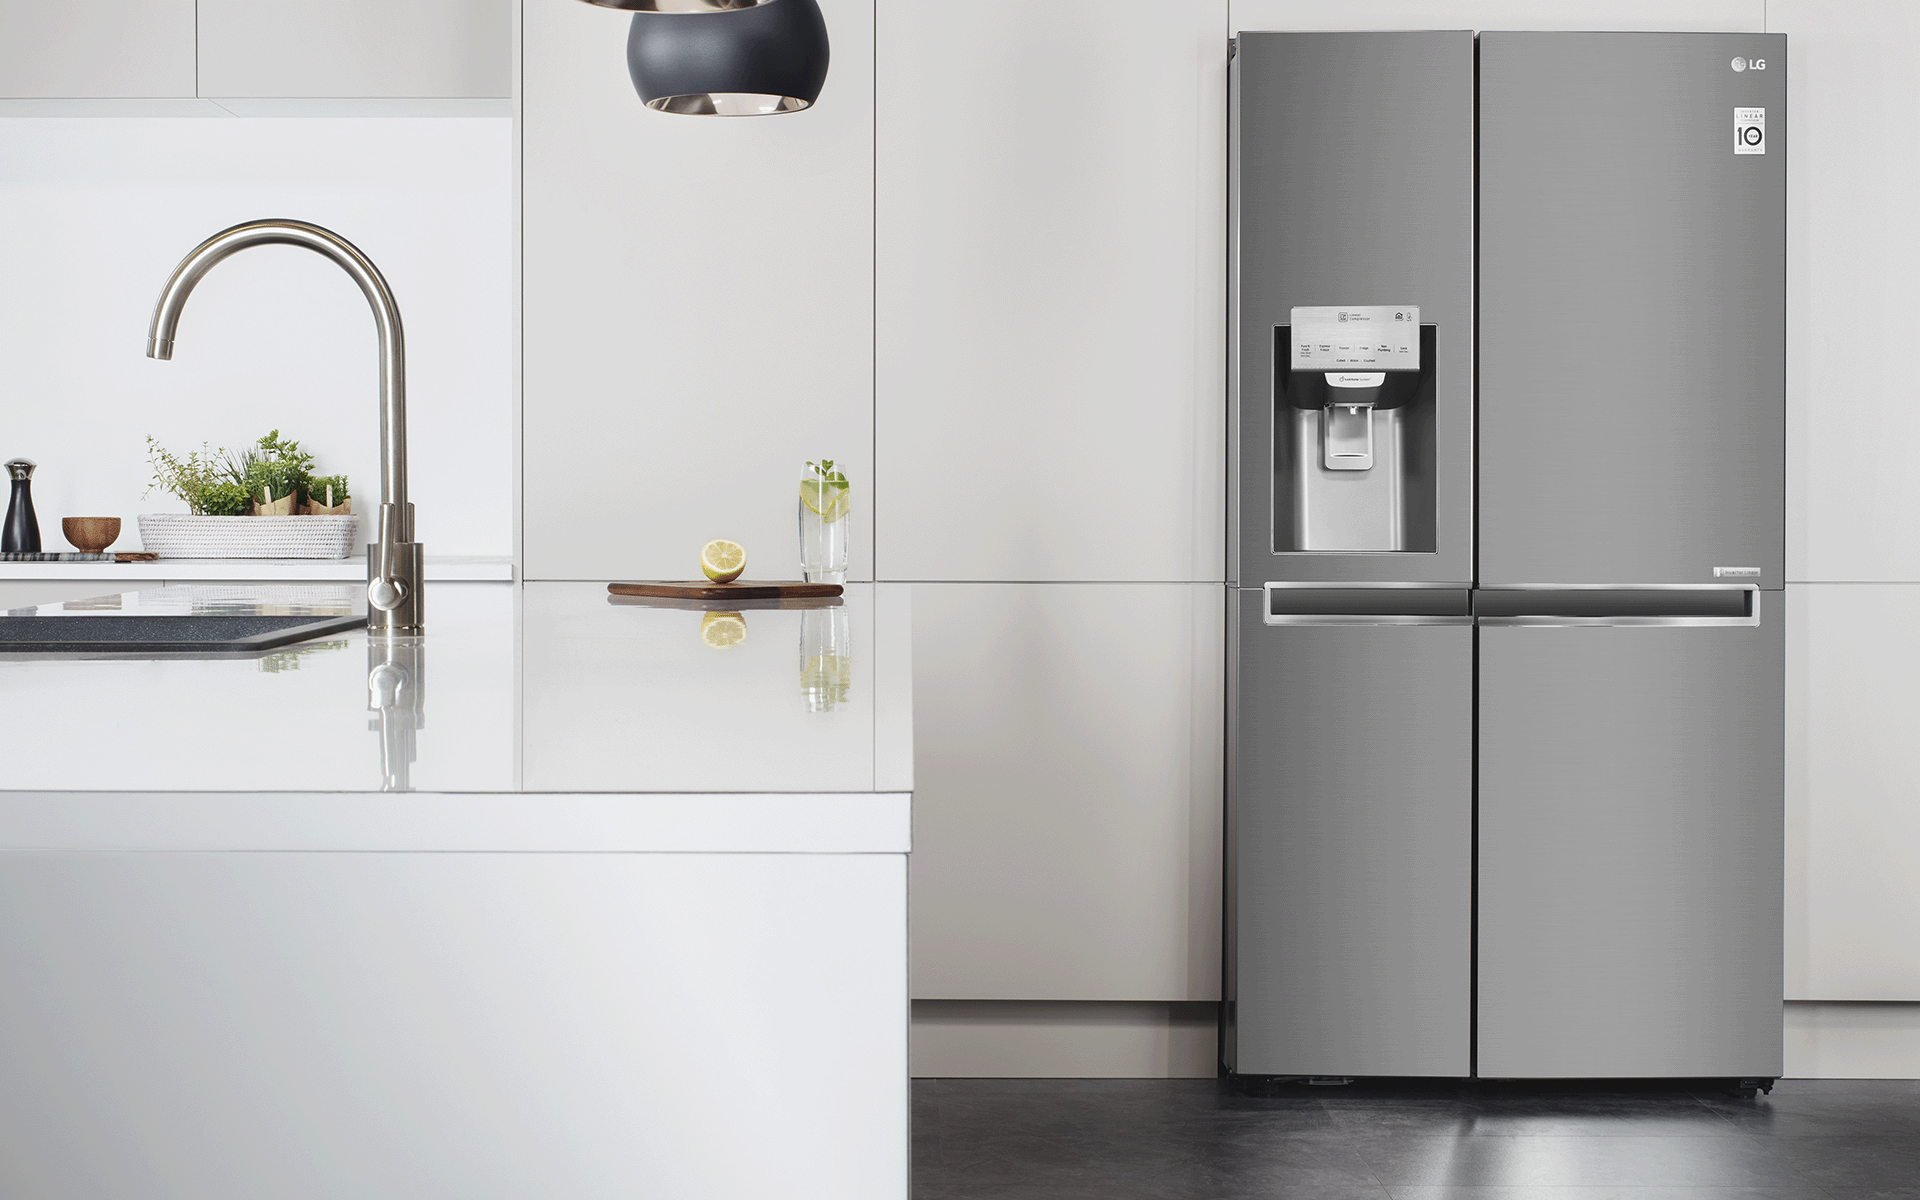 LG American Style Fridge Freezer installed in a white kitchen